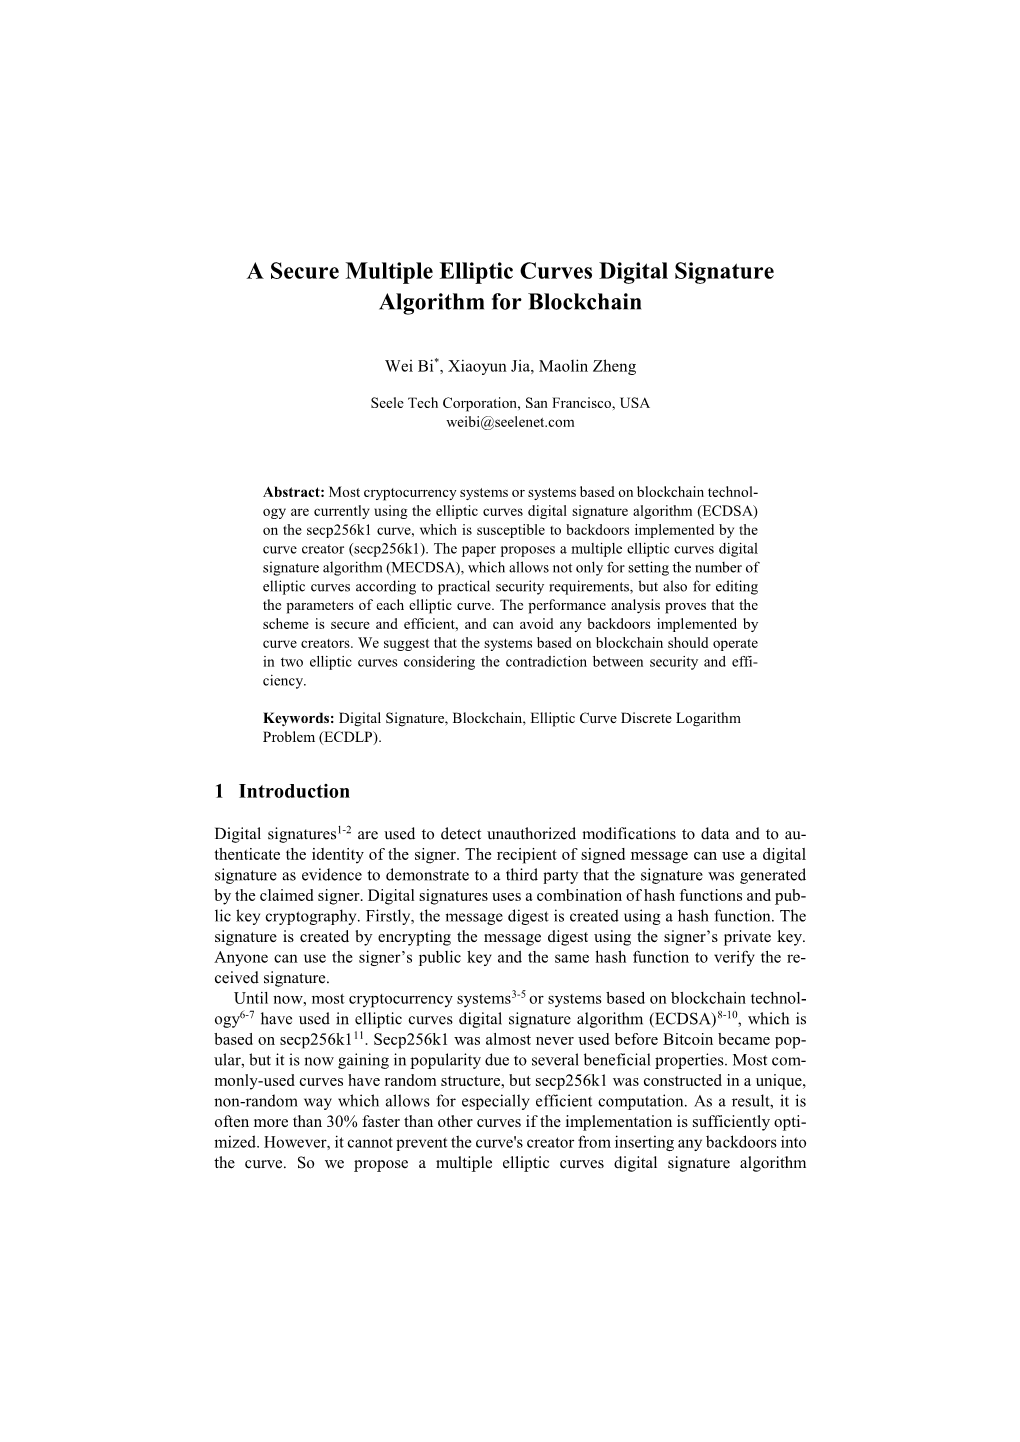 A Secure Multiple Elliptic Curves Digital Signature Algorithm for Blockchain